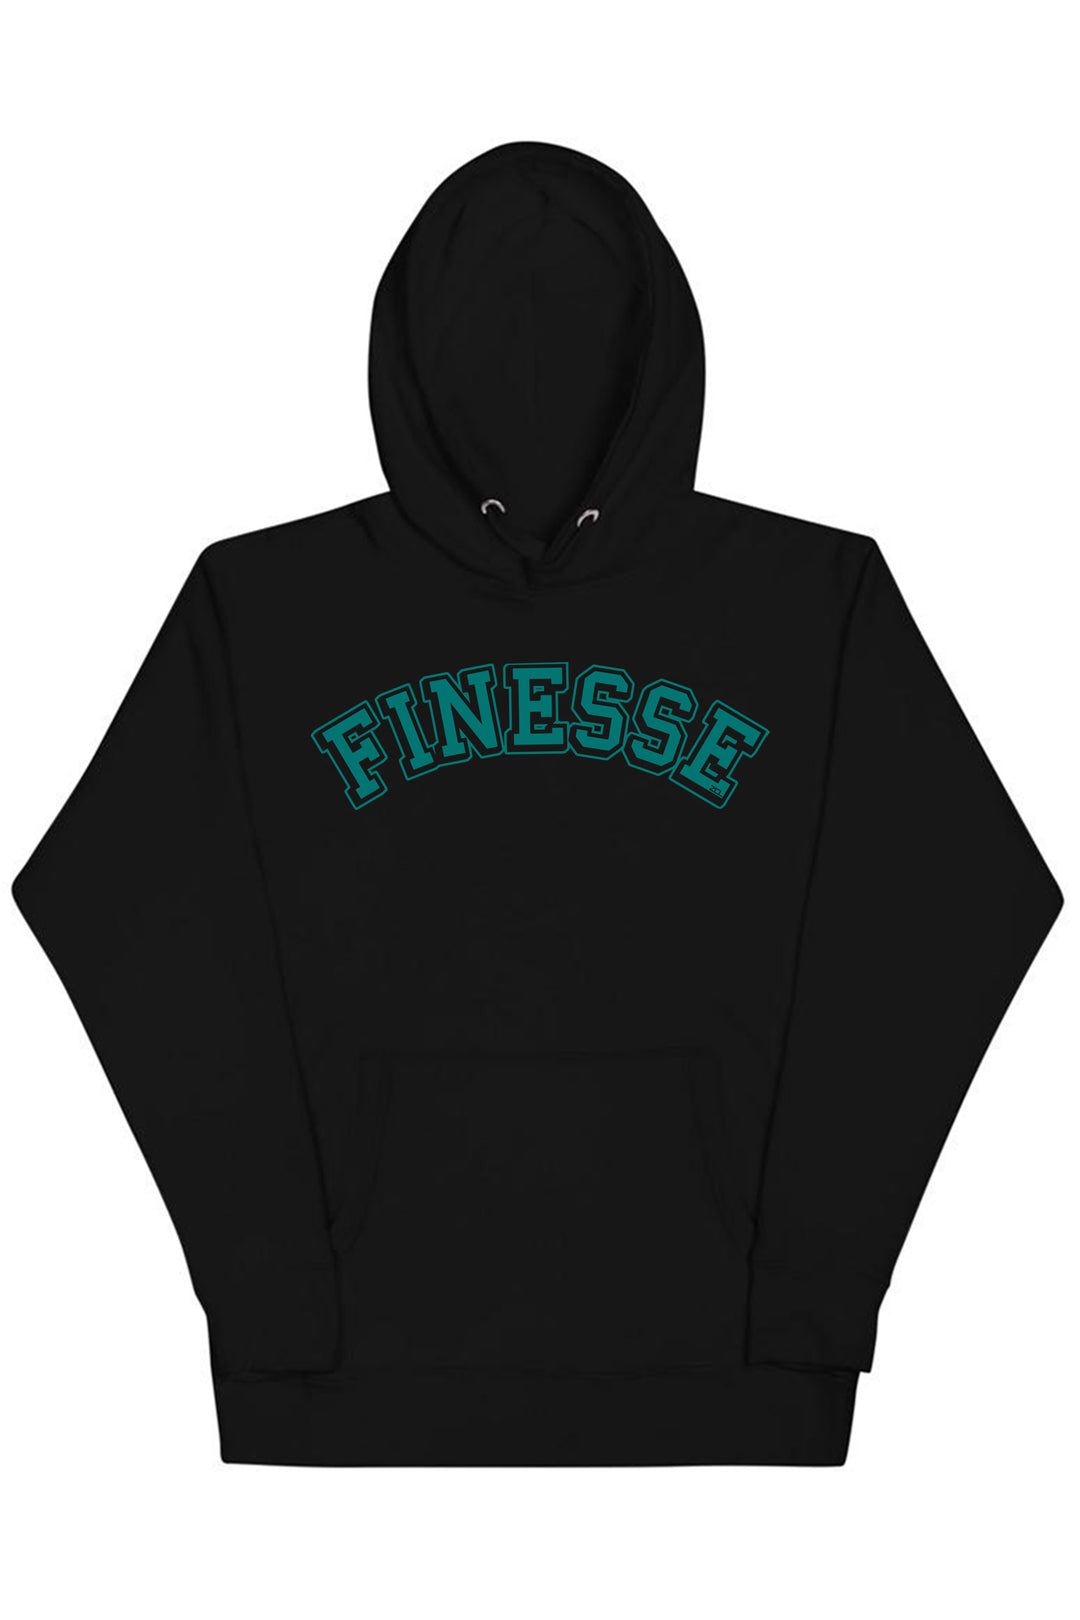 Finesse Hoodie (Teal Logo) - Zamage